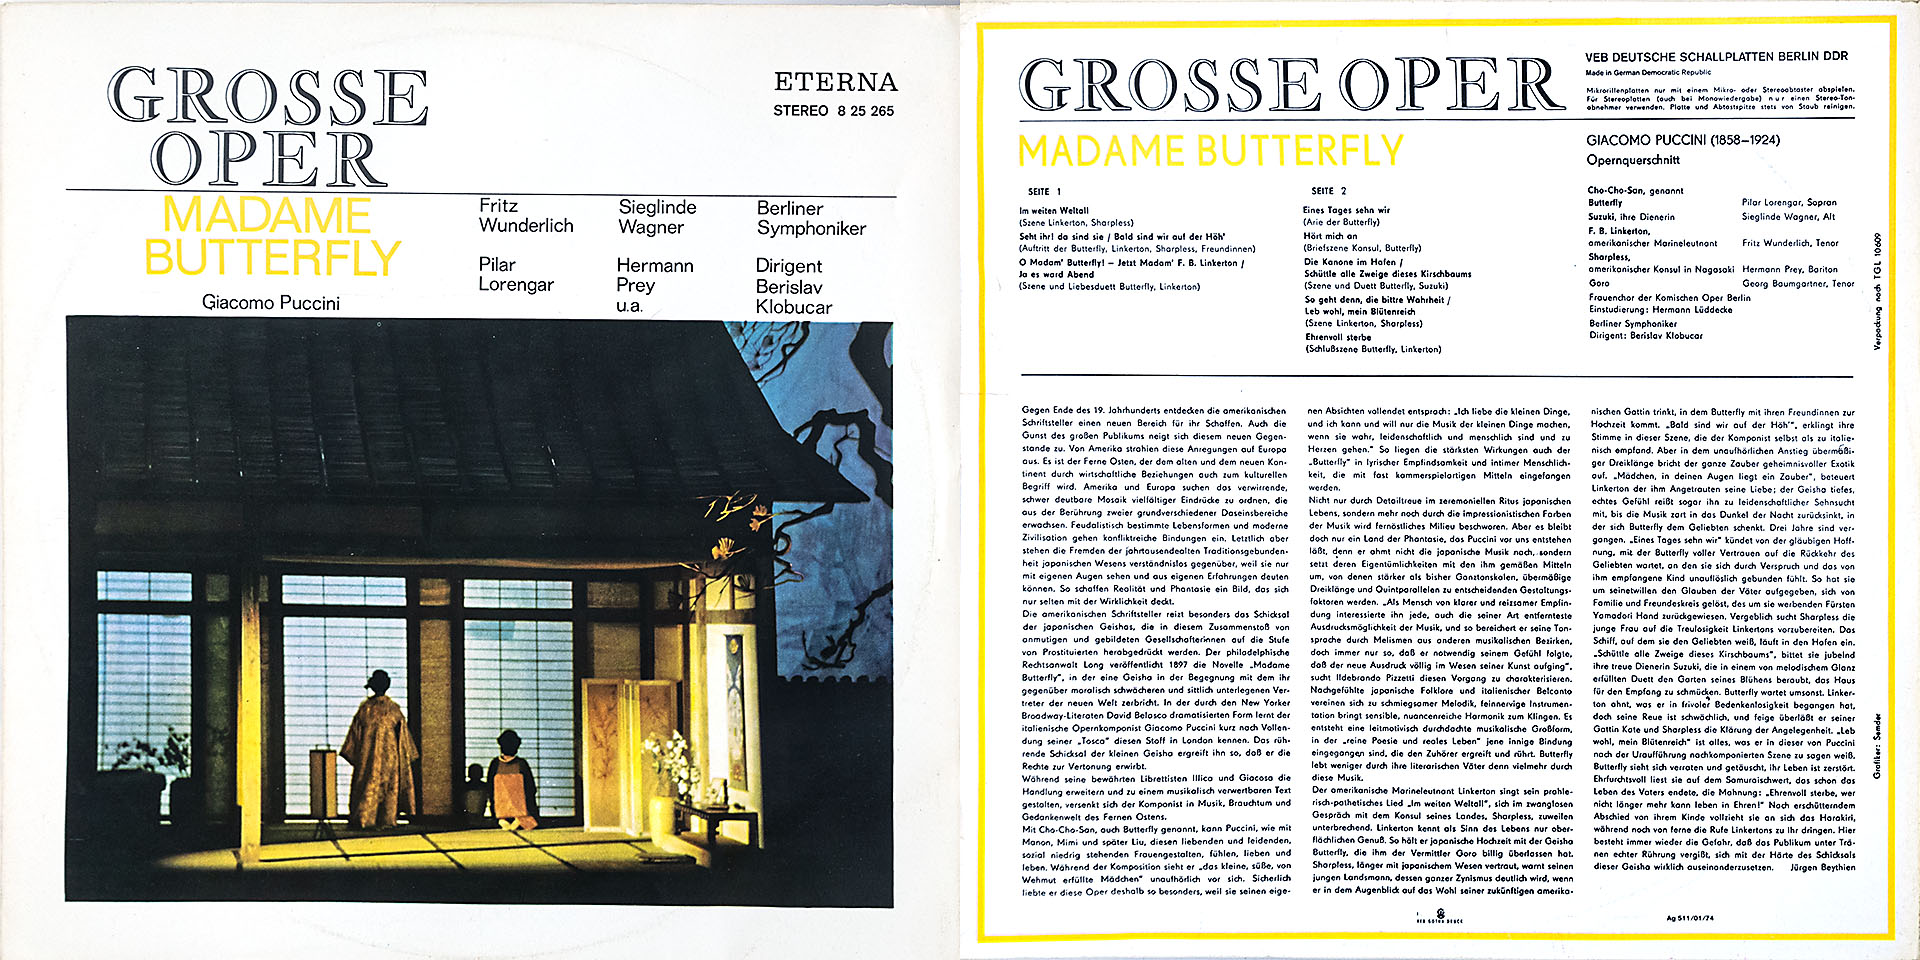 Grosse Oper - Madame Butterfly - Fritz Wunderlich / Sieglinde Wagner / Pilar Lorenger / Hermann Prey u. v. a. m.